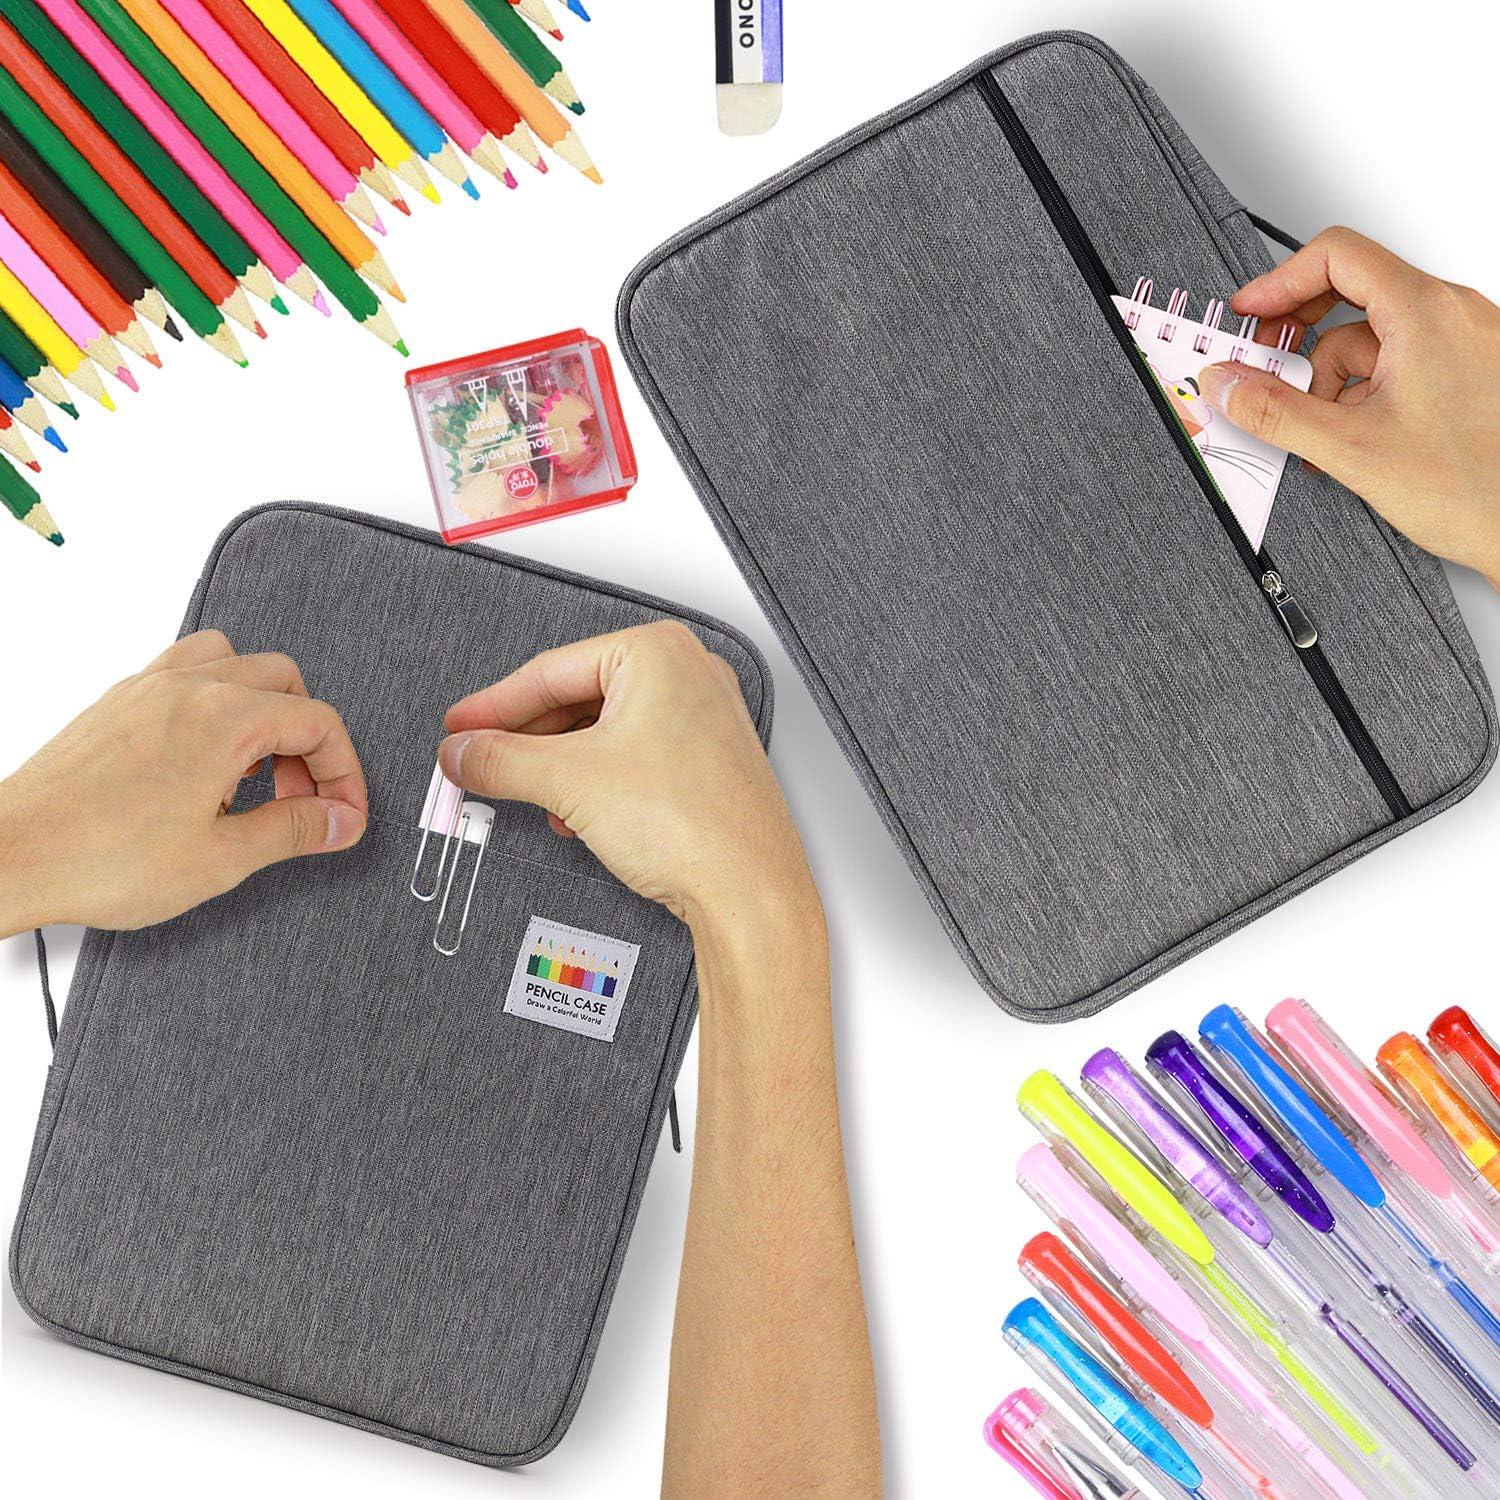 Colored Pencil Case 200 Slots Pen Pencil Bag Organizer with Handle Strap  Portable- Multilayer Holder for Colored Pencils & Gel Pen - Grey 